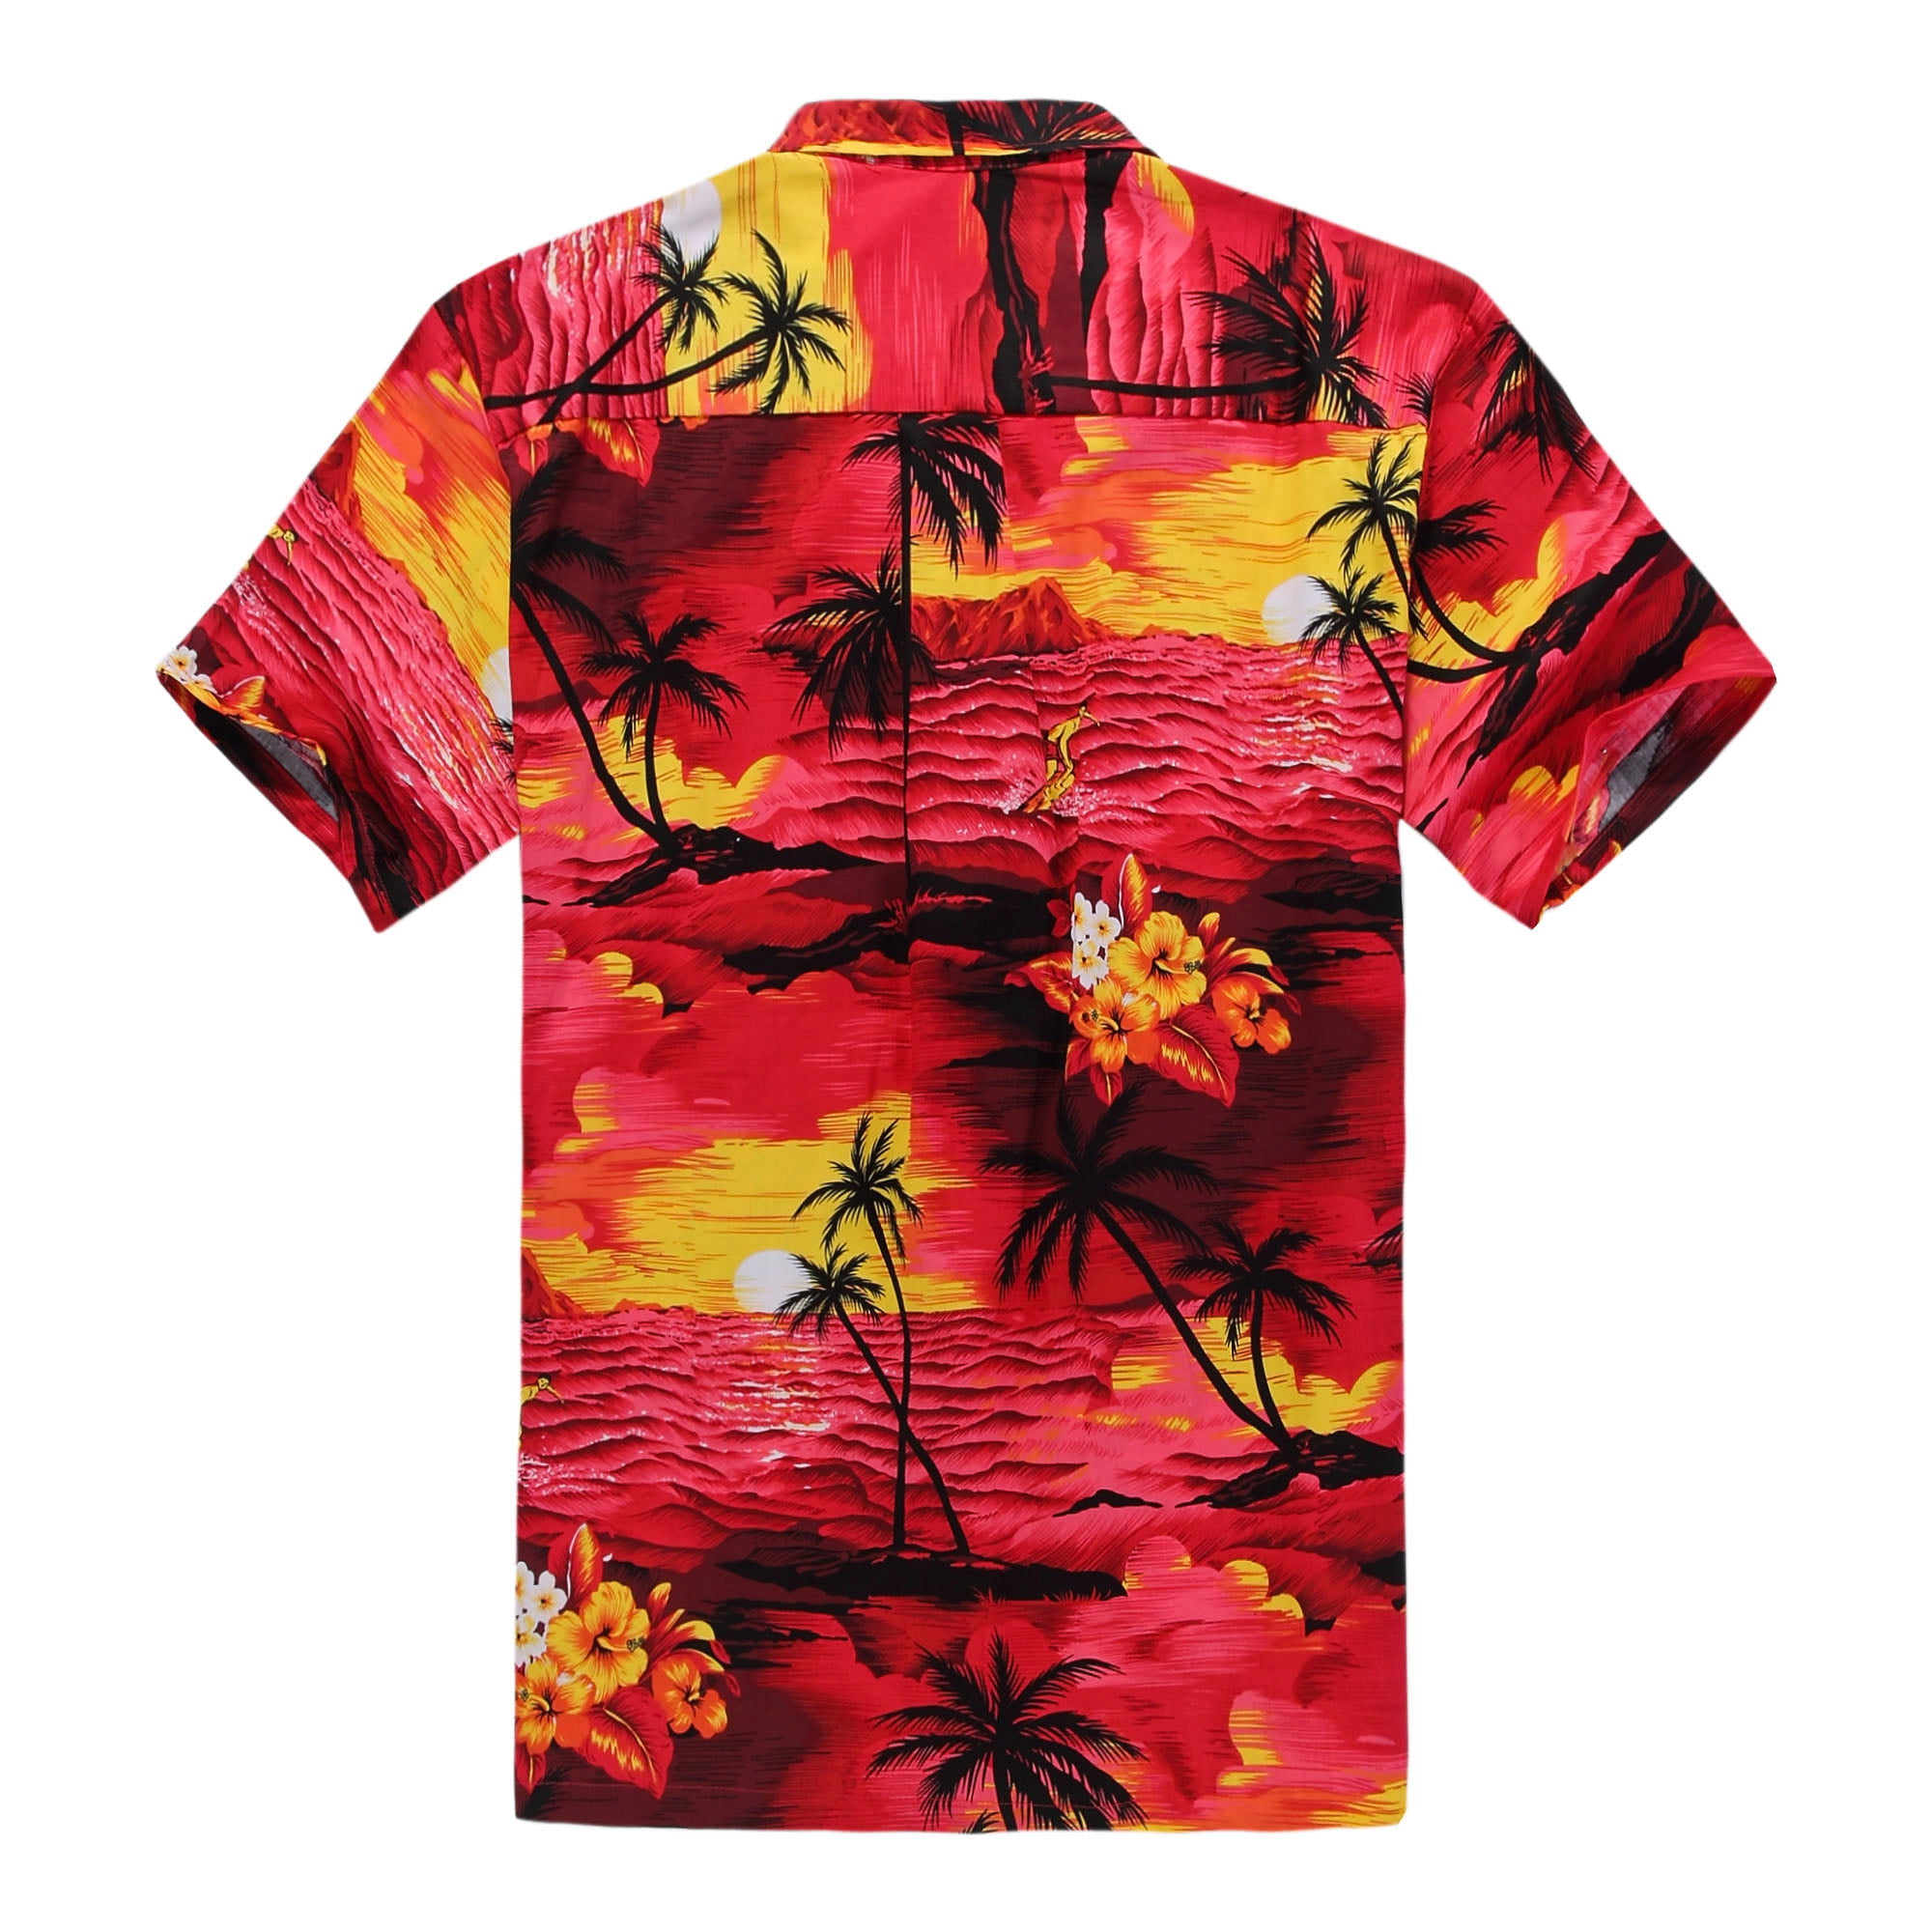 High Water Hawaiian Shirt For Men - Sunset Red – California Cowboy